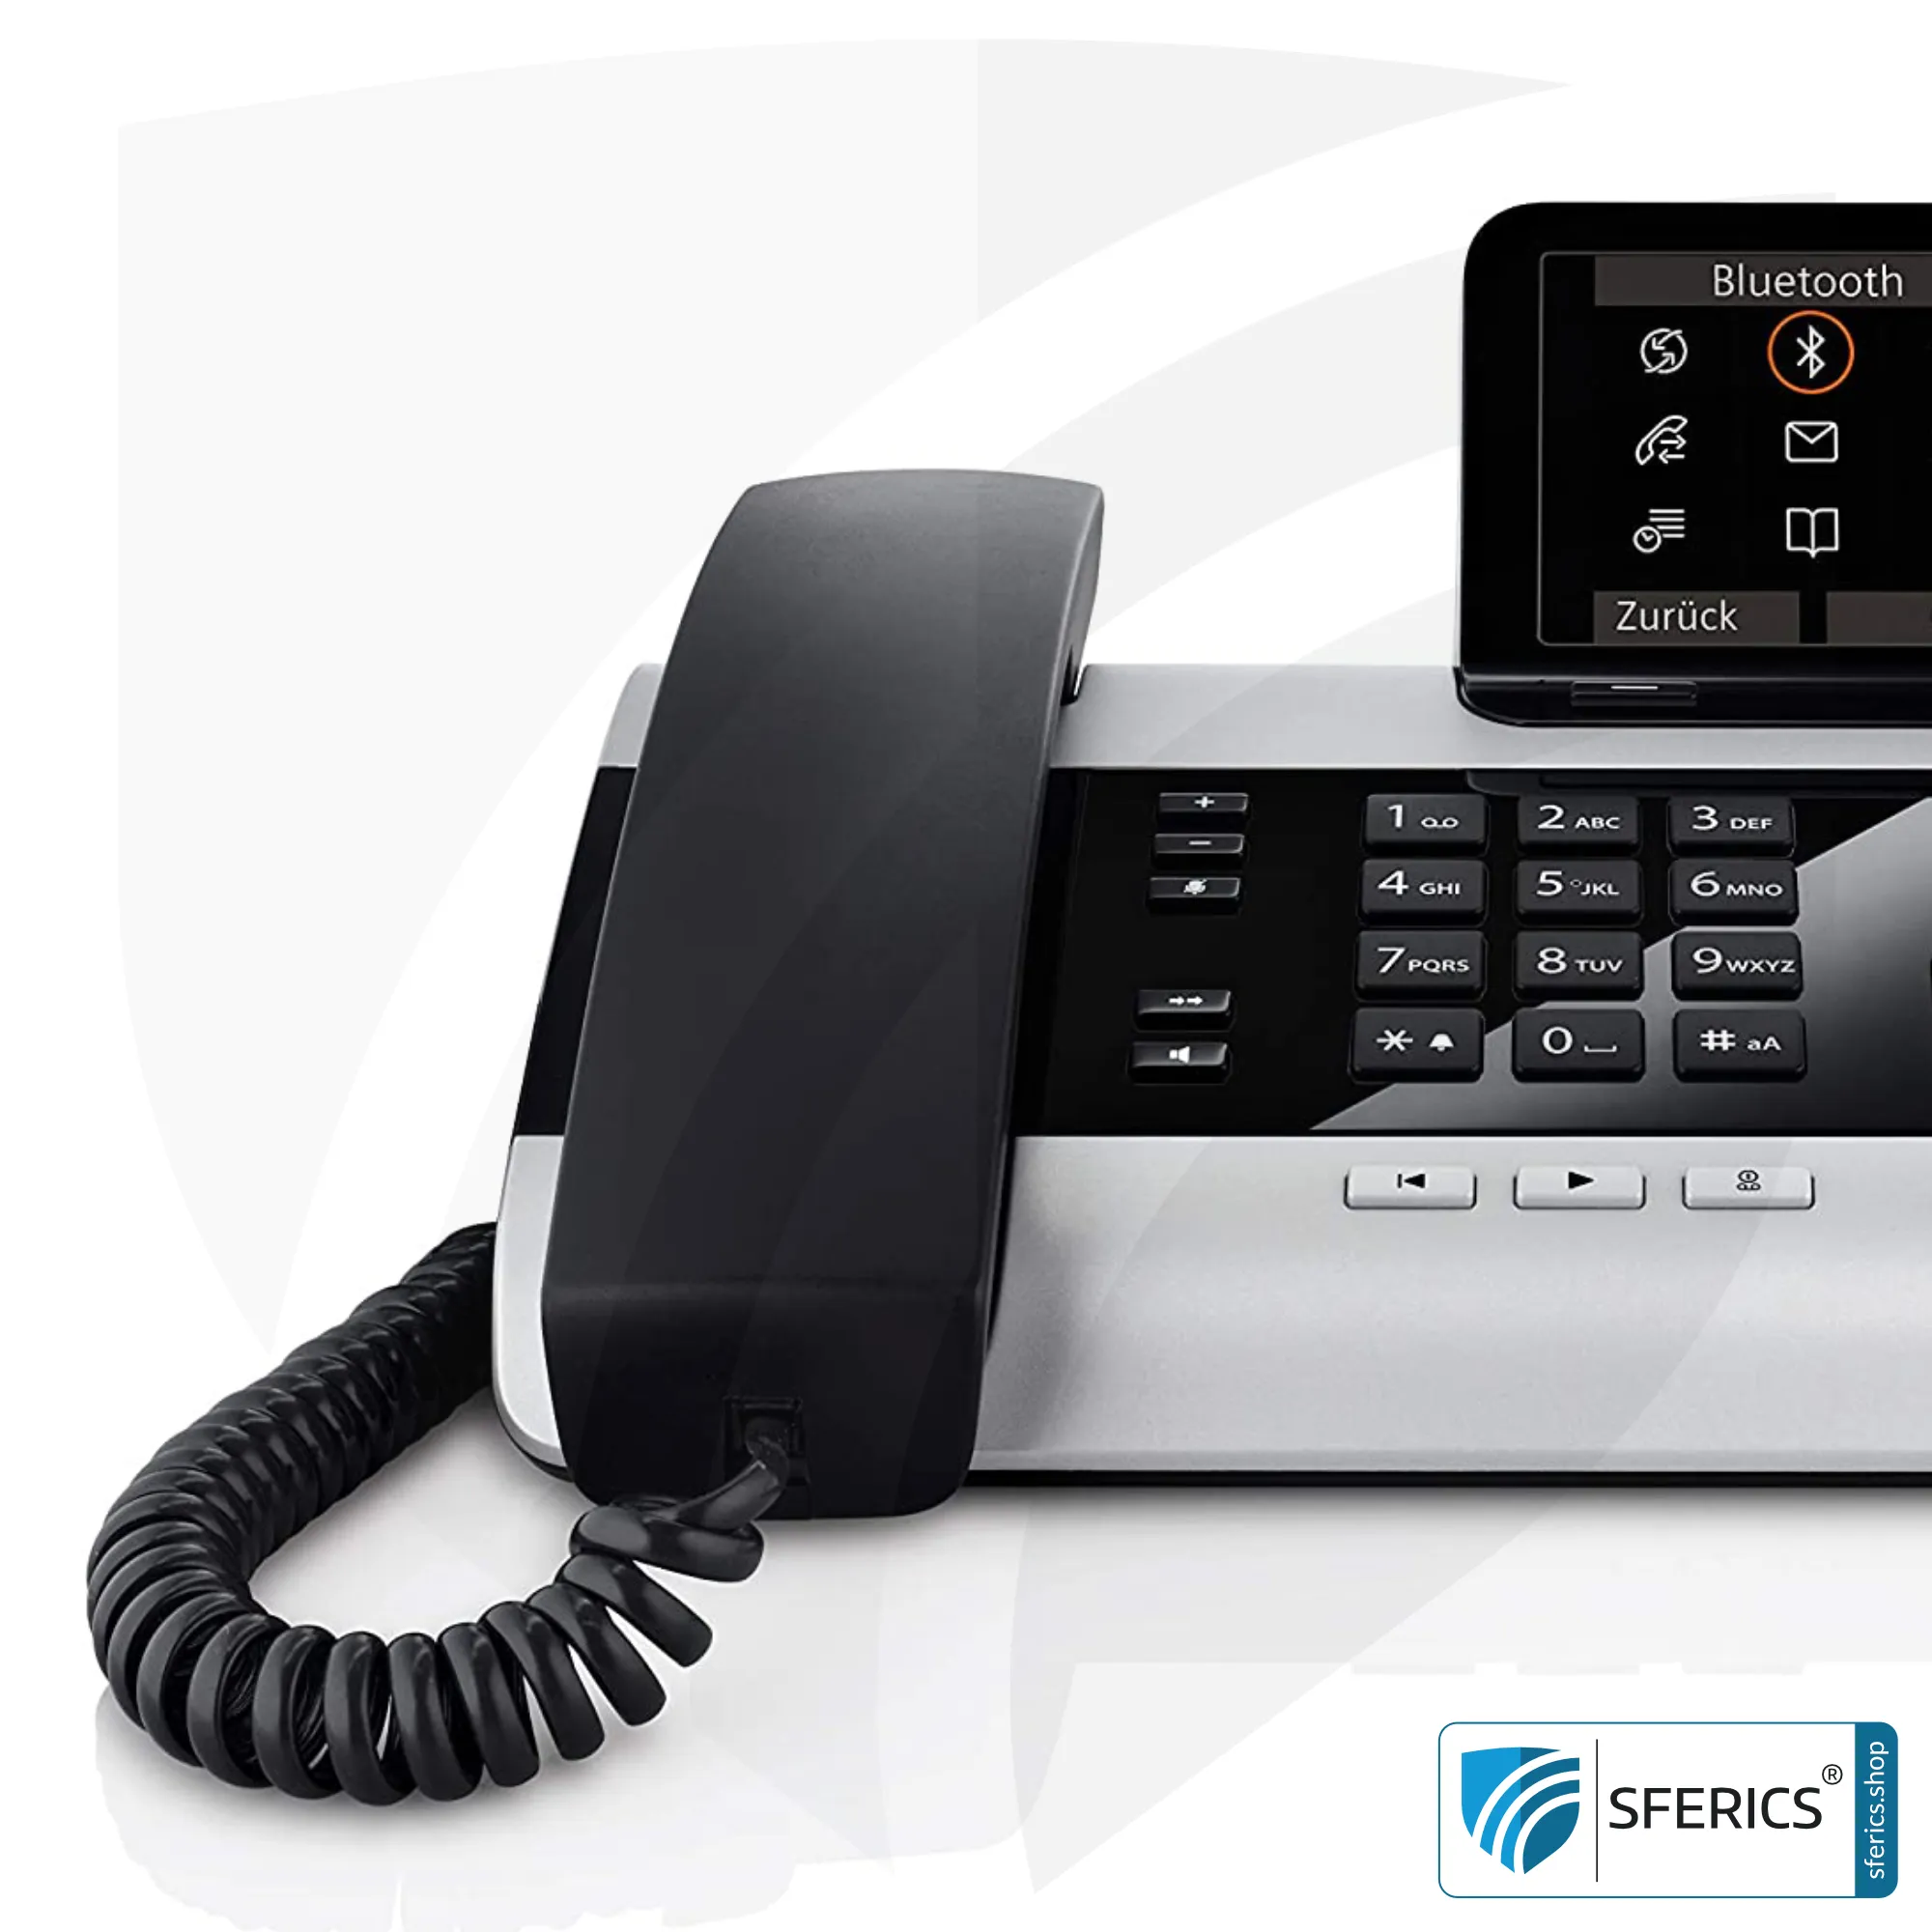 GIGASET DX800A Telefon, kabelgebunden | strahlungarm durch ECO DECT+ | analog, digital, VoIP, Anrufbeantworter